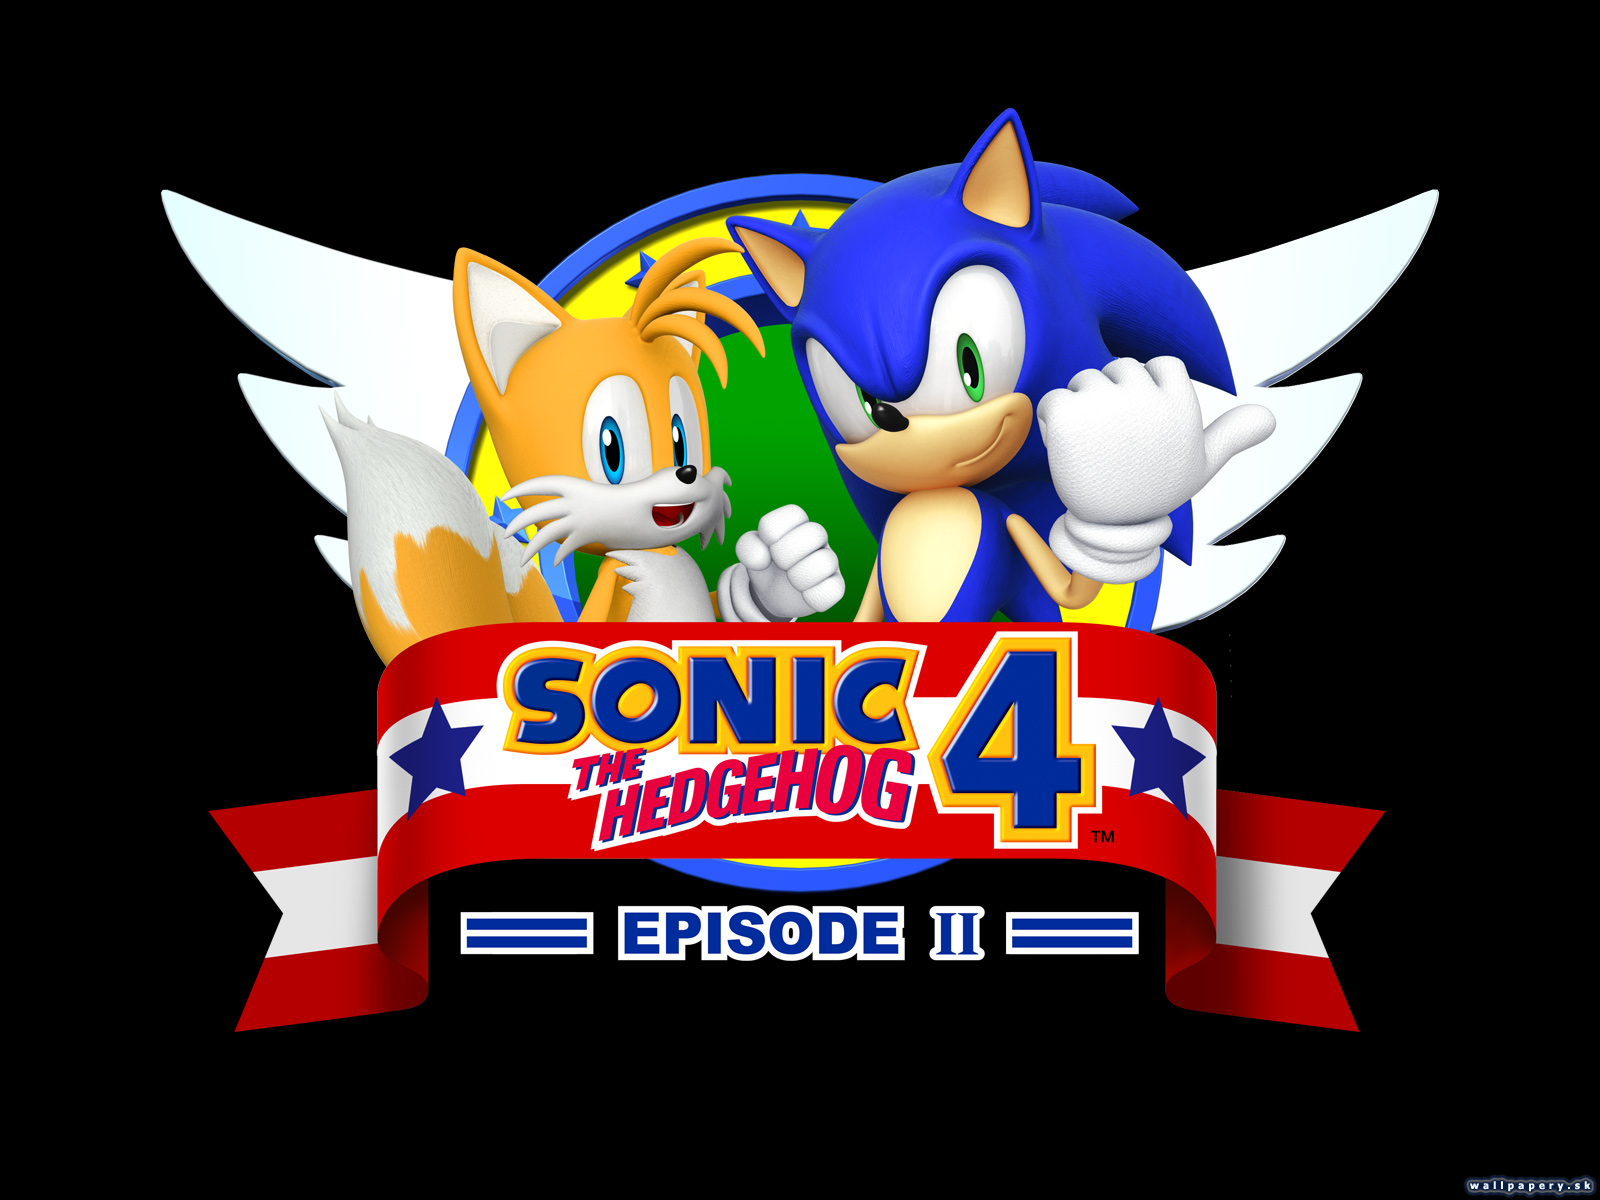 Sonic the hedgehog 4 2. Sonic the Hedgehog 4 Episode II обложка. Sonic the Hedgehog 4: Episode II. Соник 4 эпизод 3.